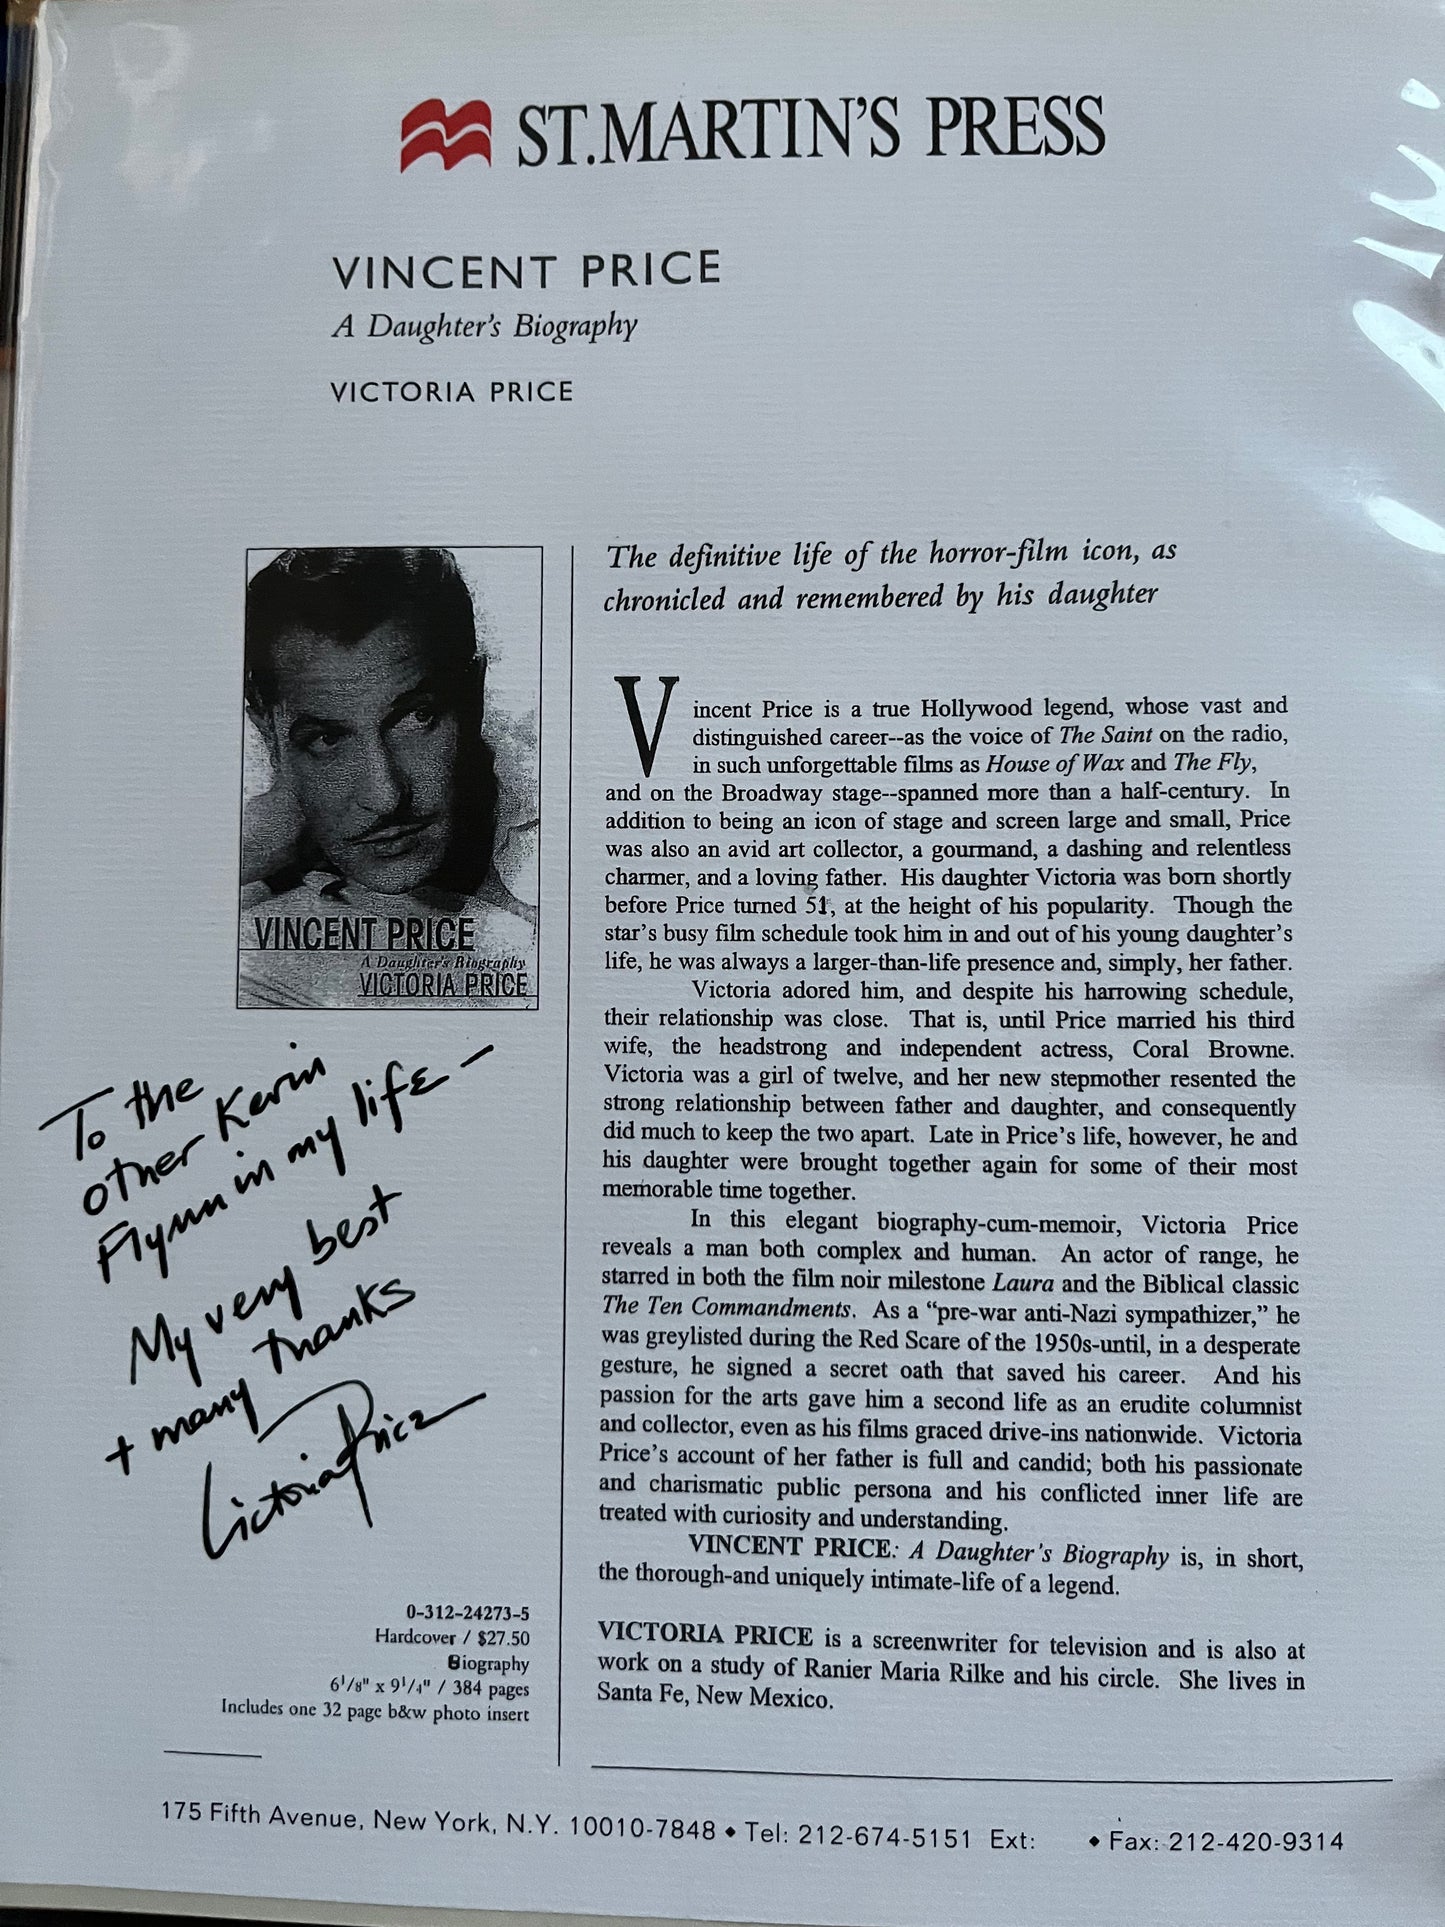 Victoria Price, daughter of Vincent Price, autograph